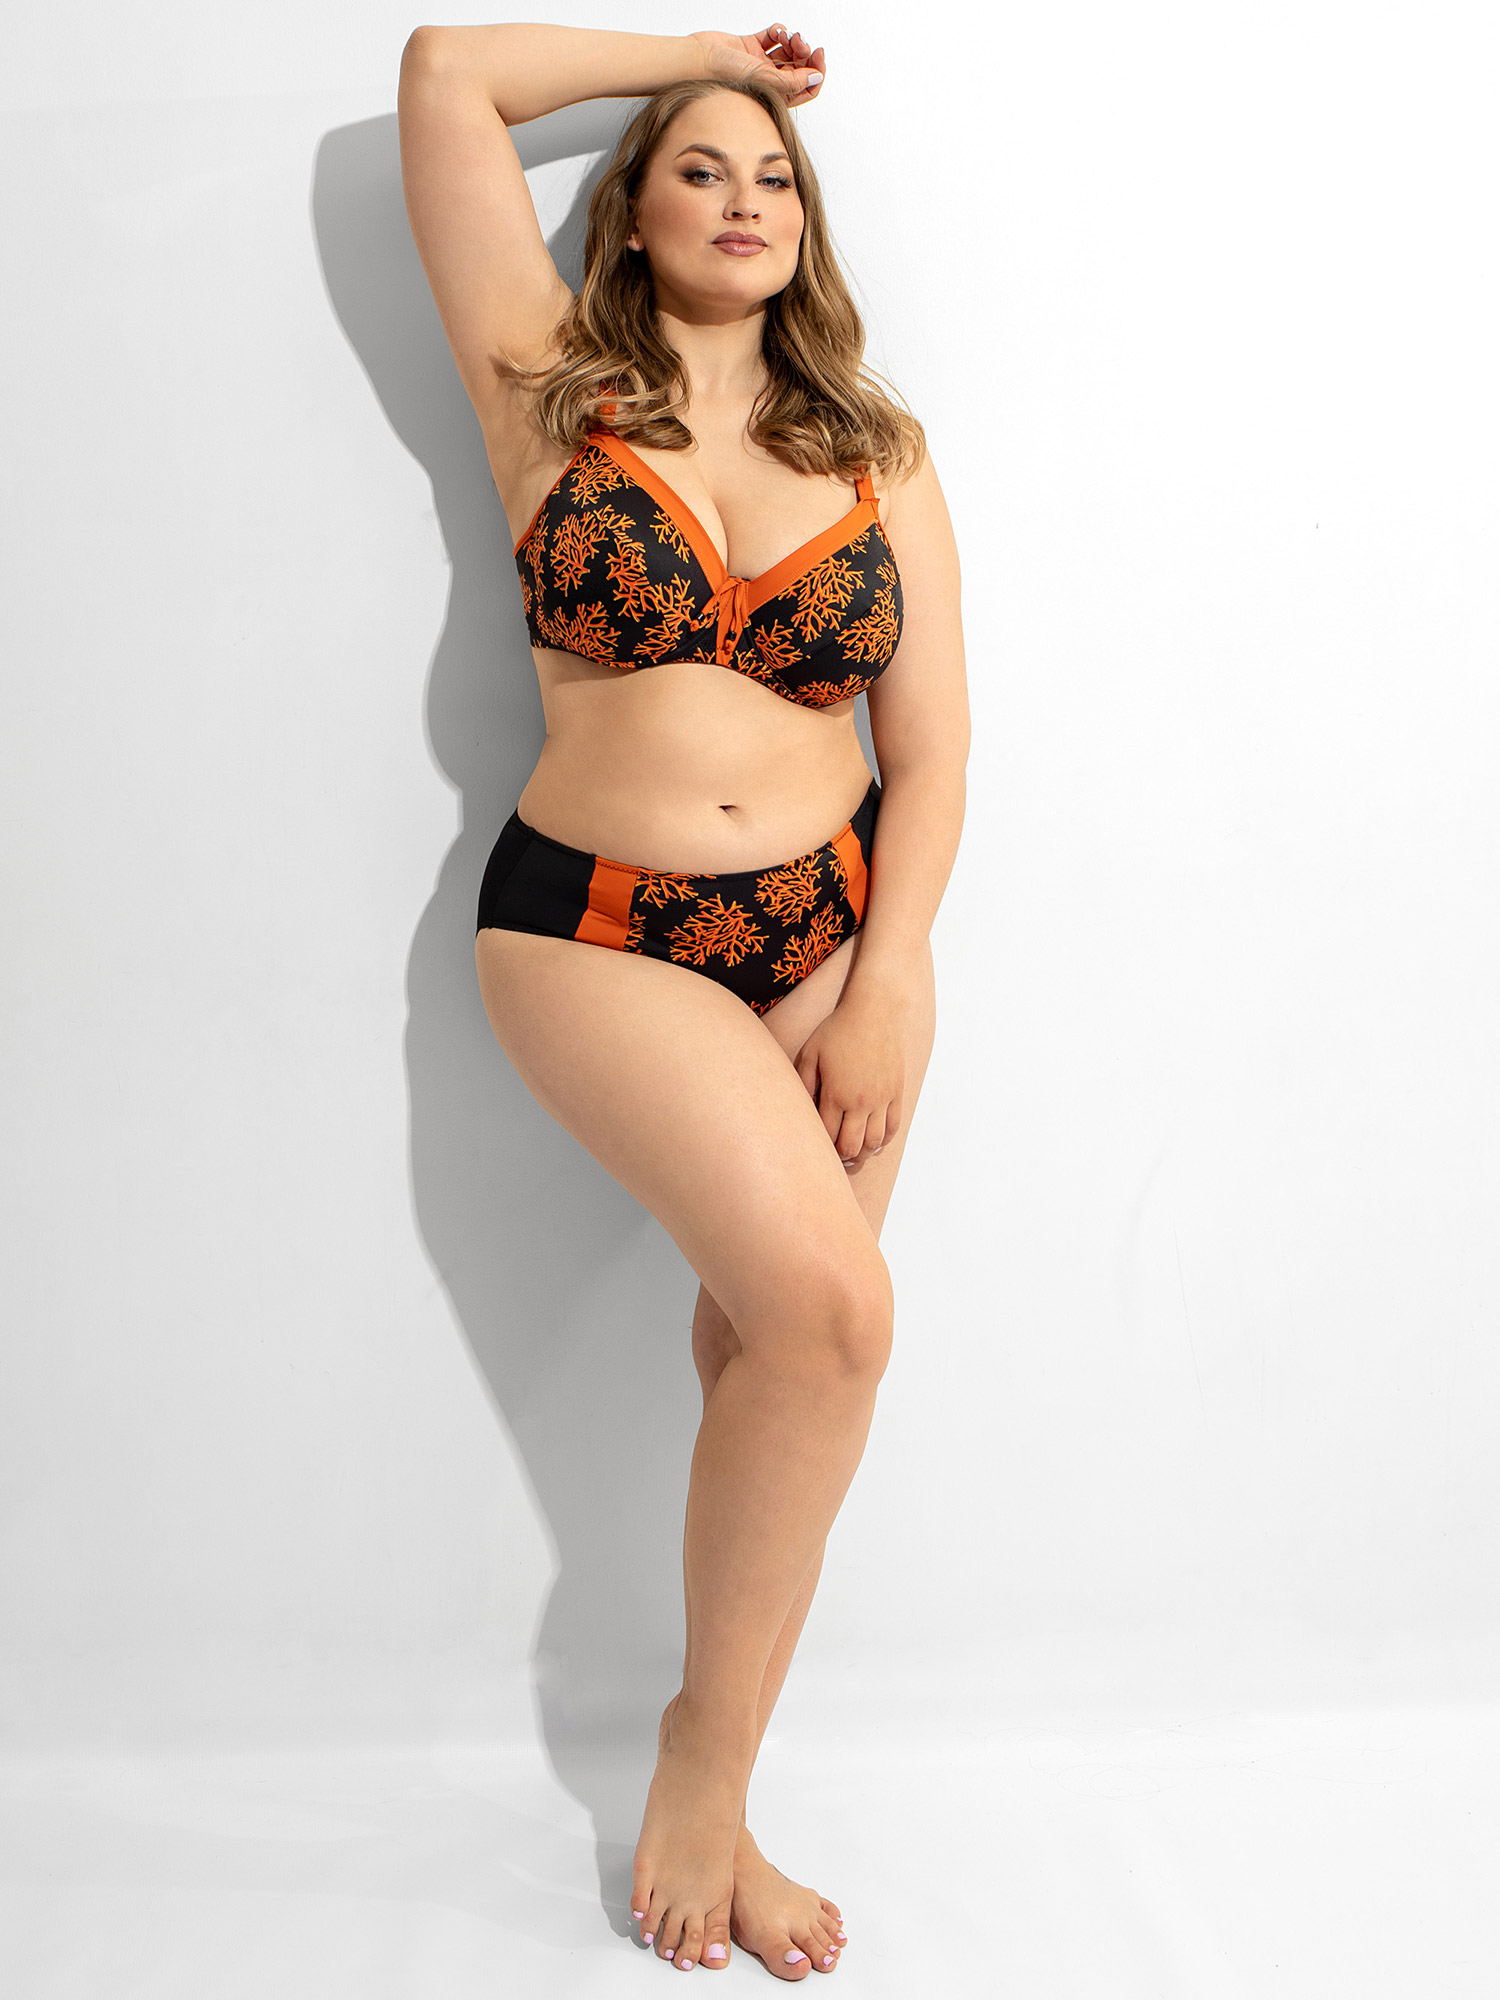 Tai - Sort bikini truse med oransje print fra Plaisir